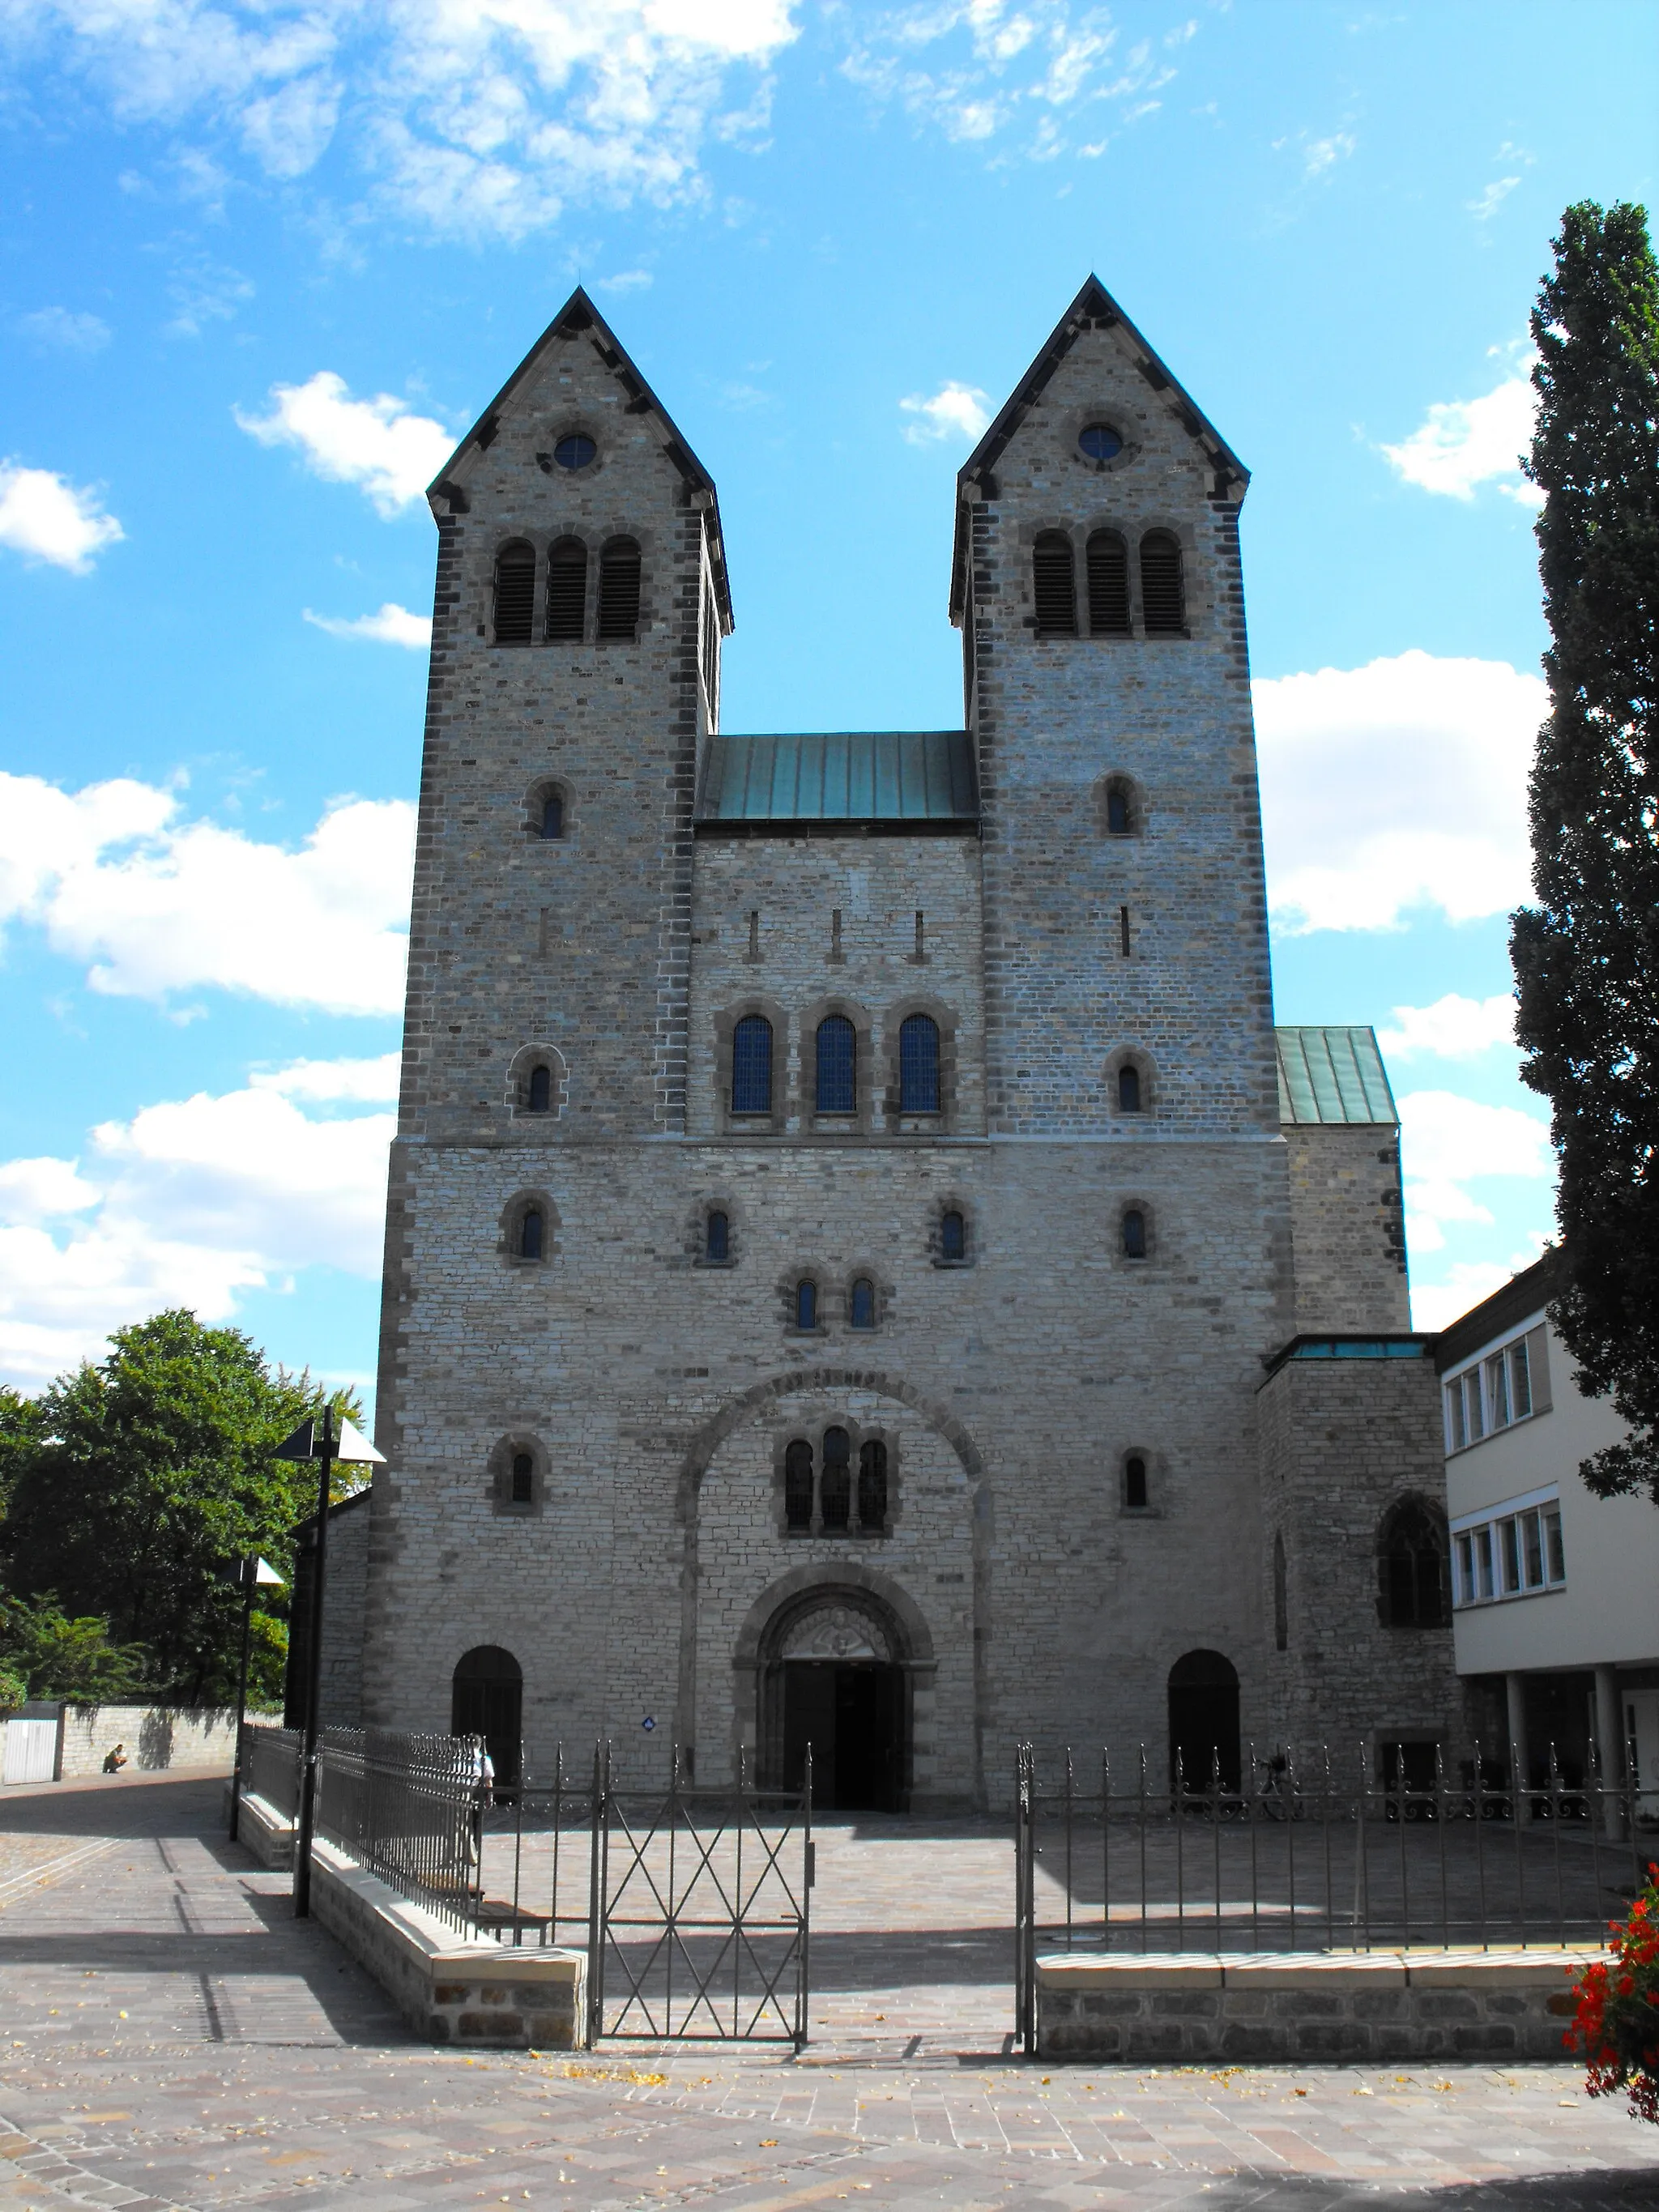 Photo showing: Abdinghofkirche, Paderborn, Germany